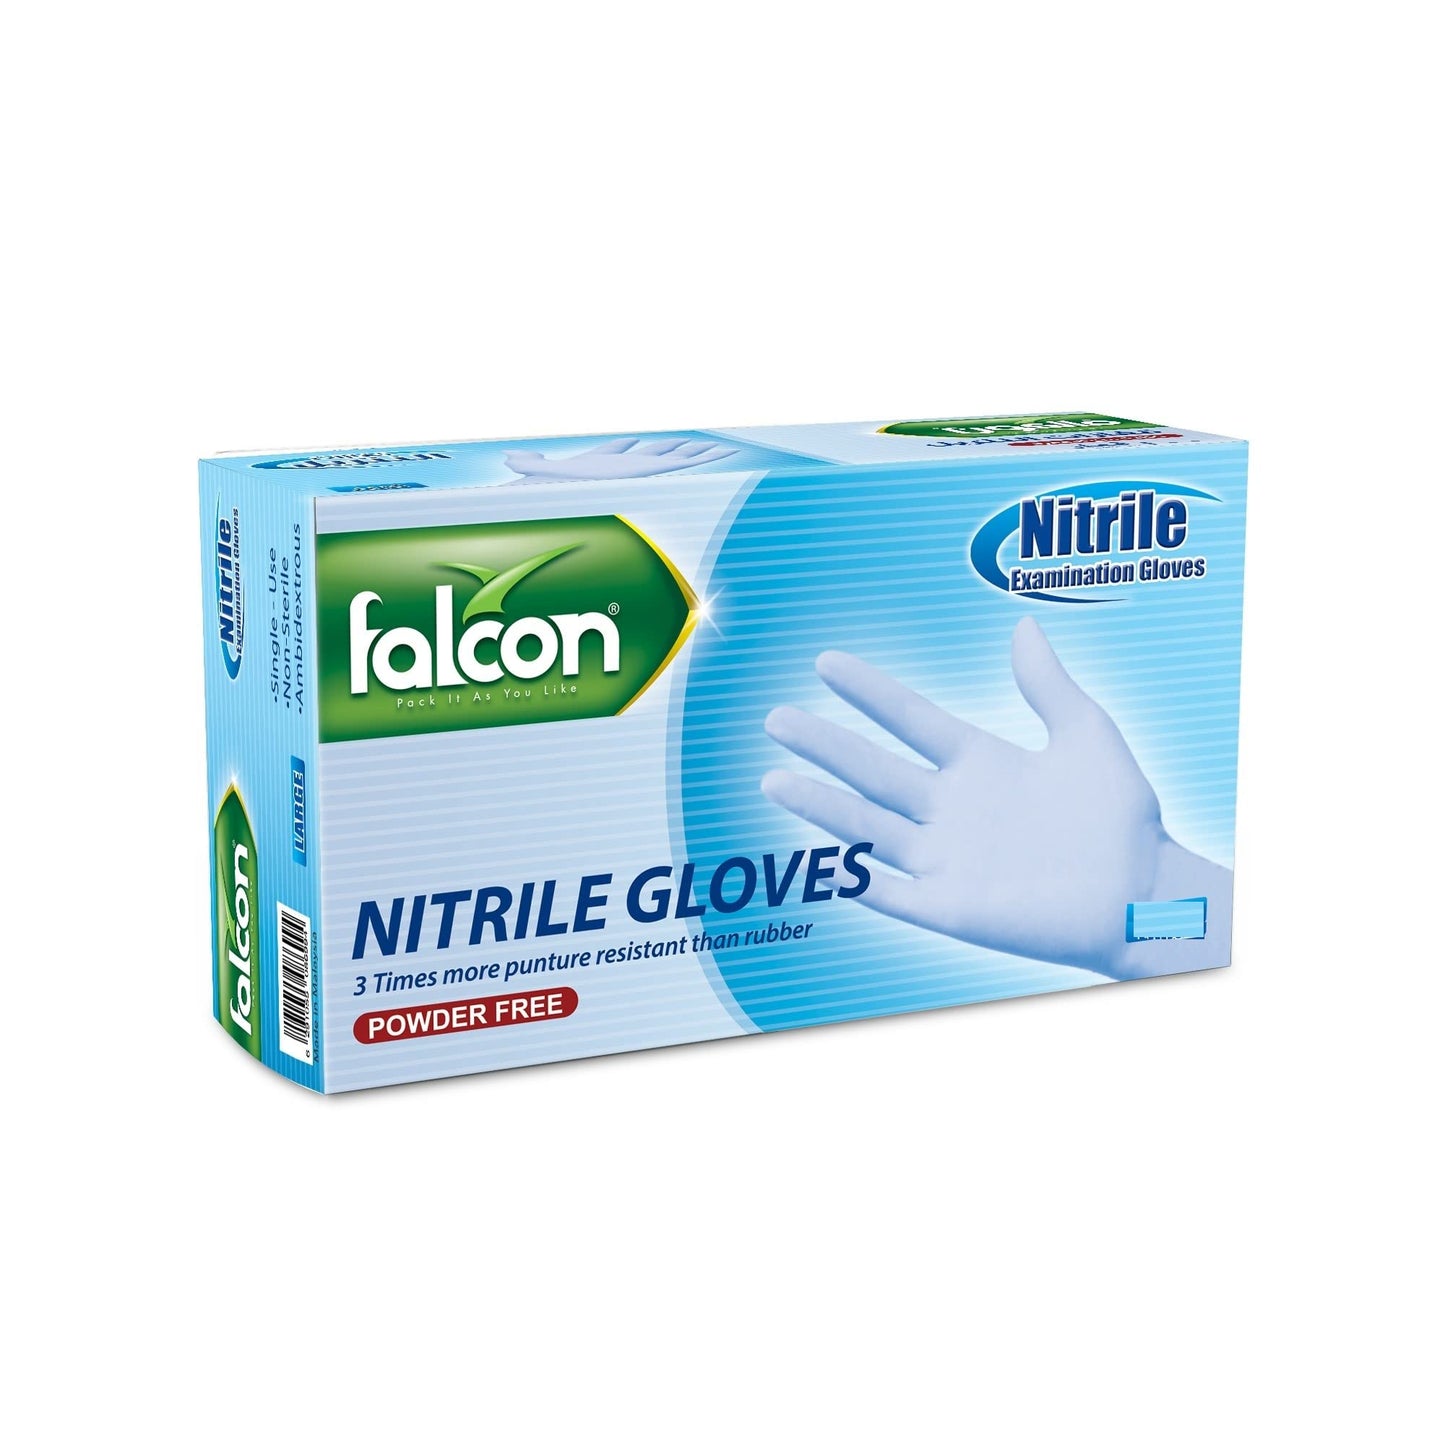 Falcon Nitrile Gloves - 100 Pieces